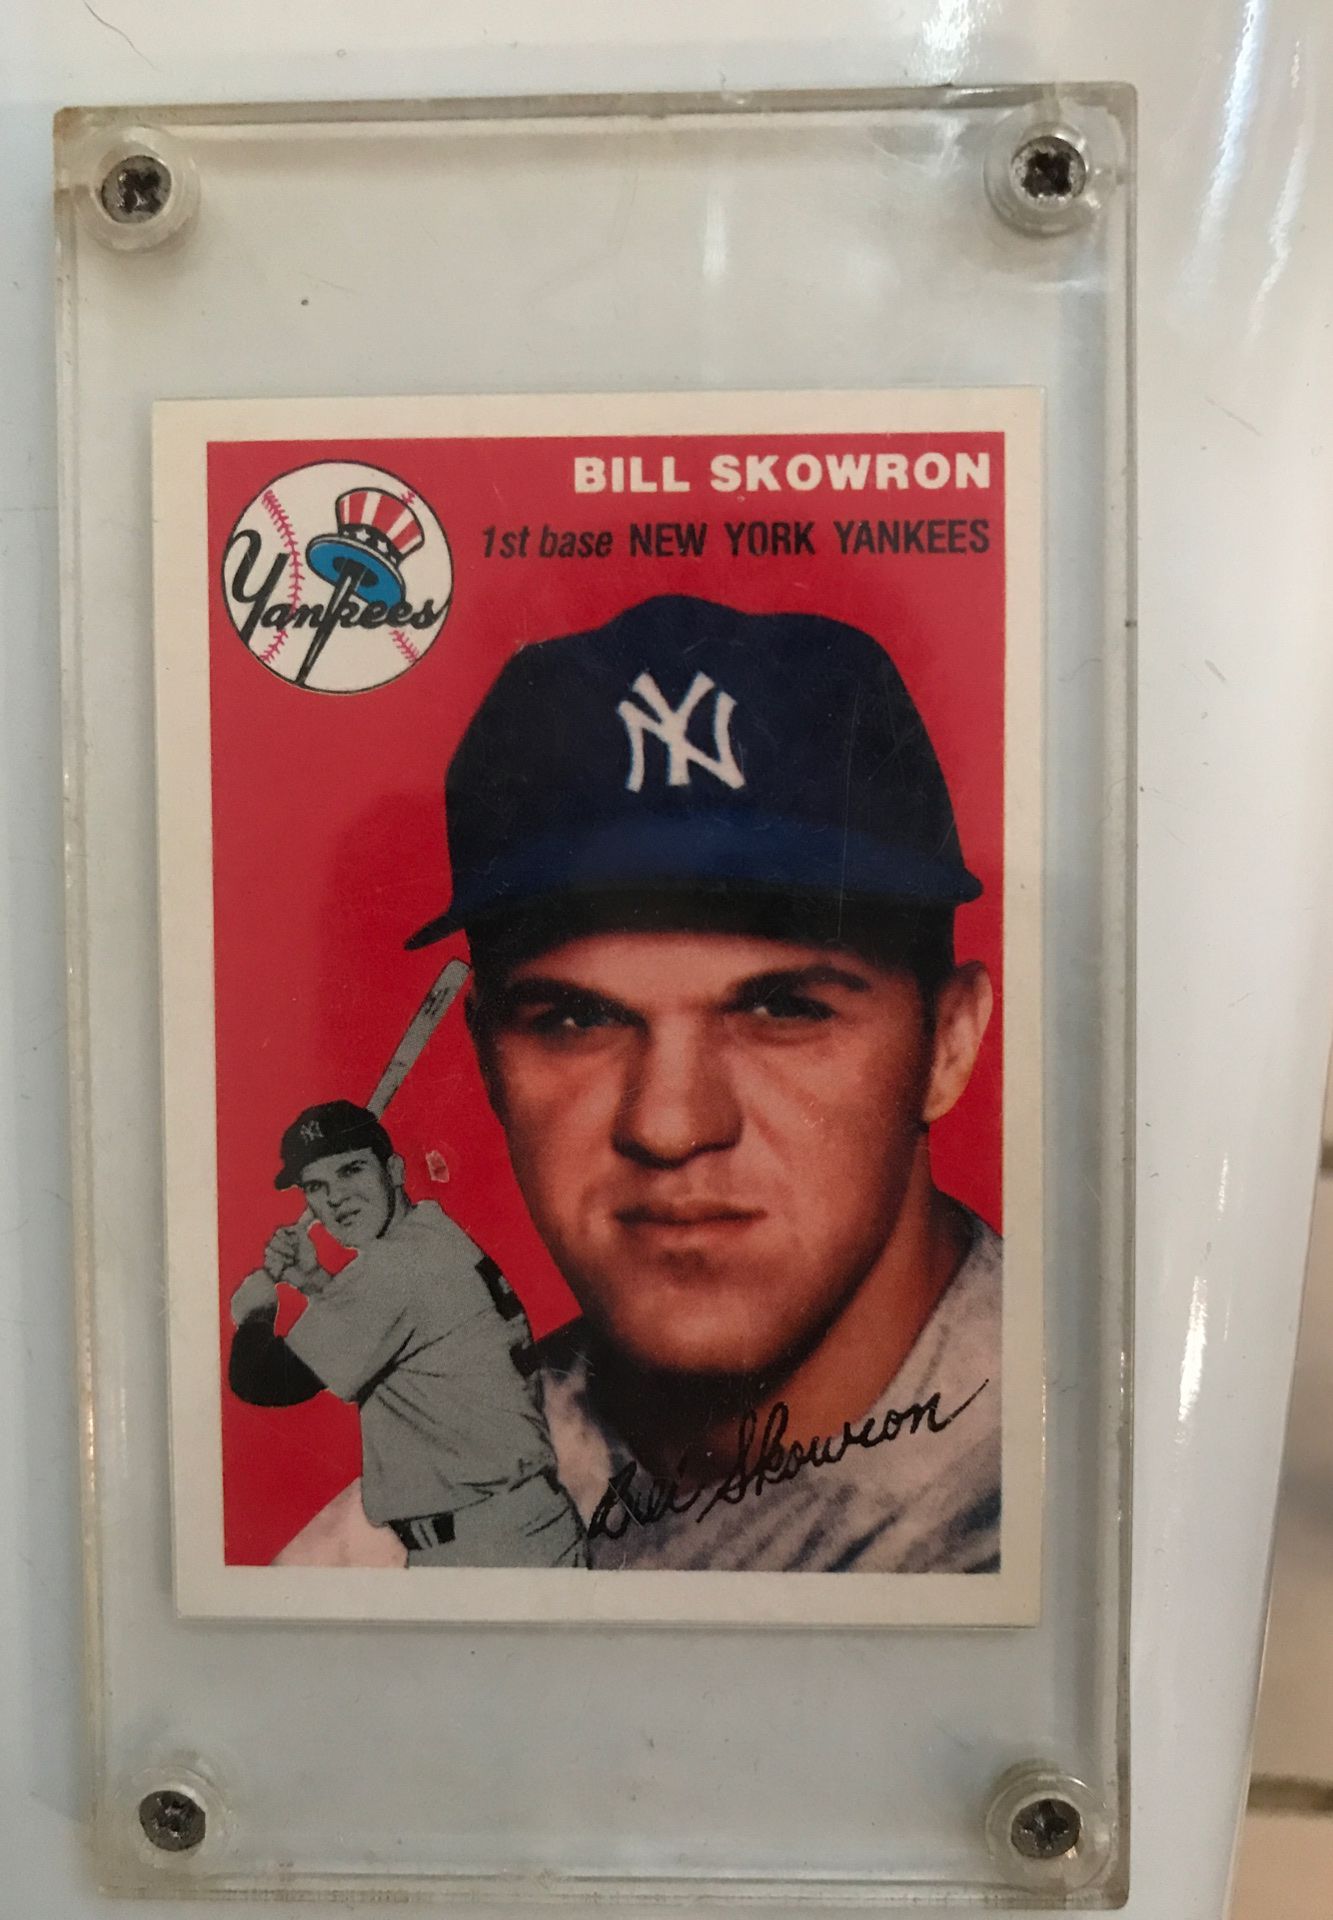 BILL SKOWRON Topps baseball card